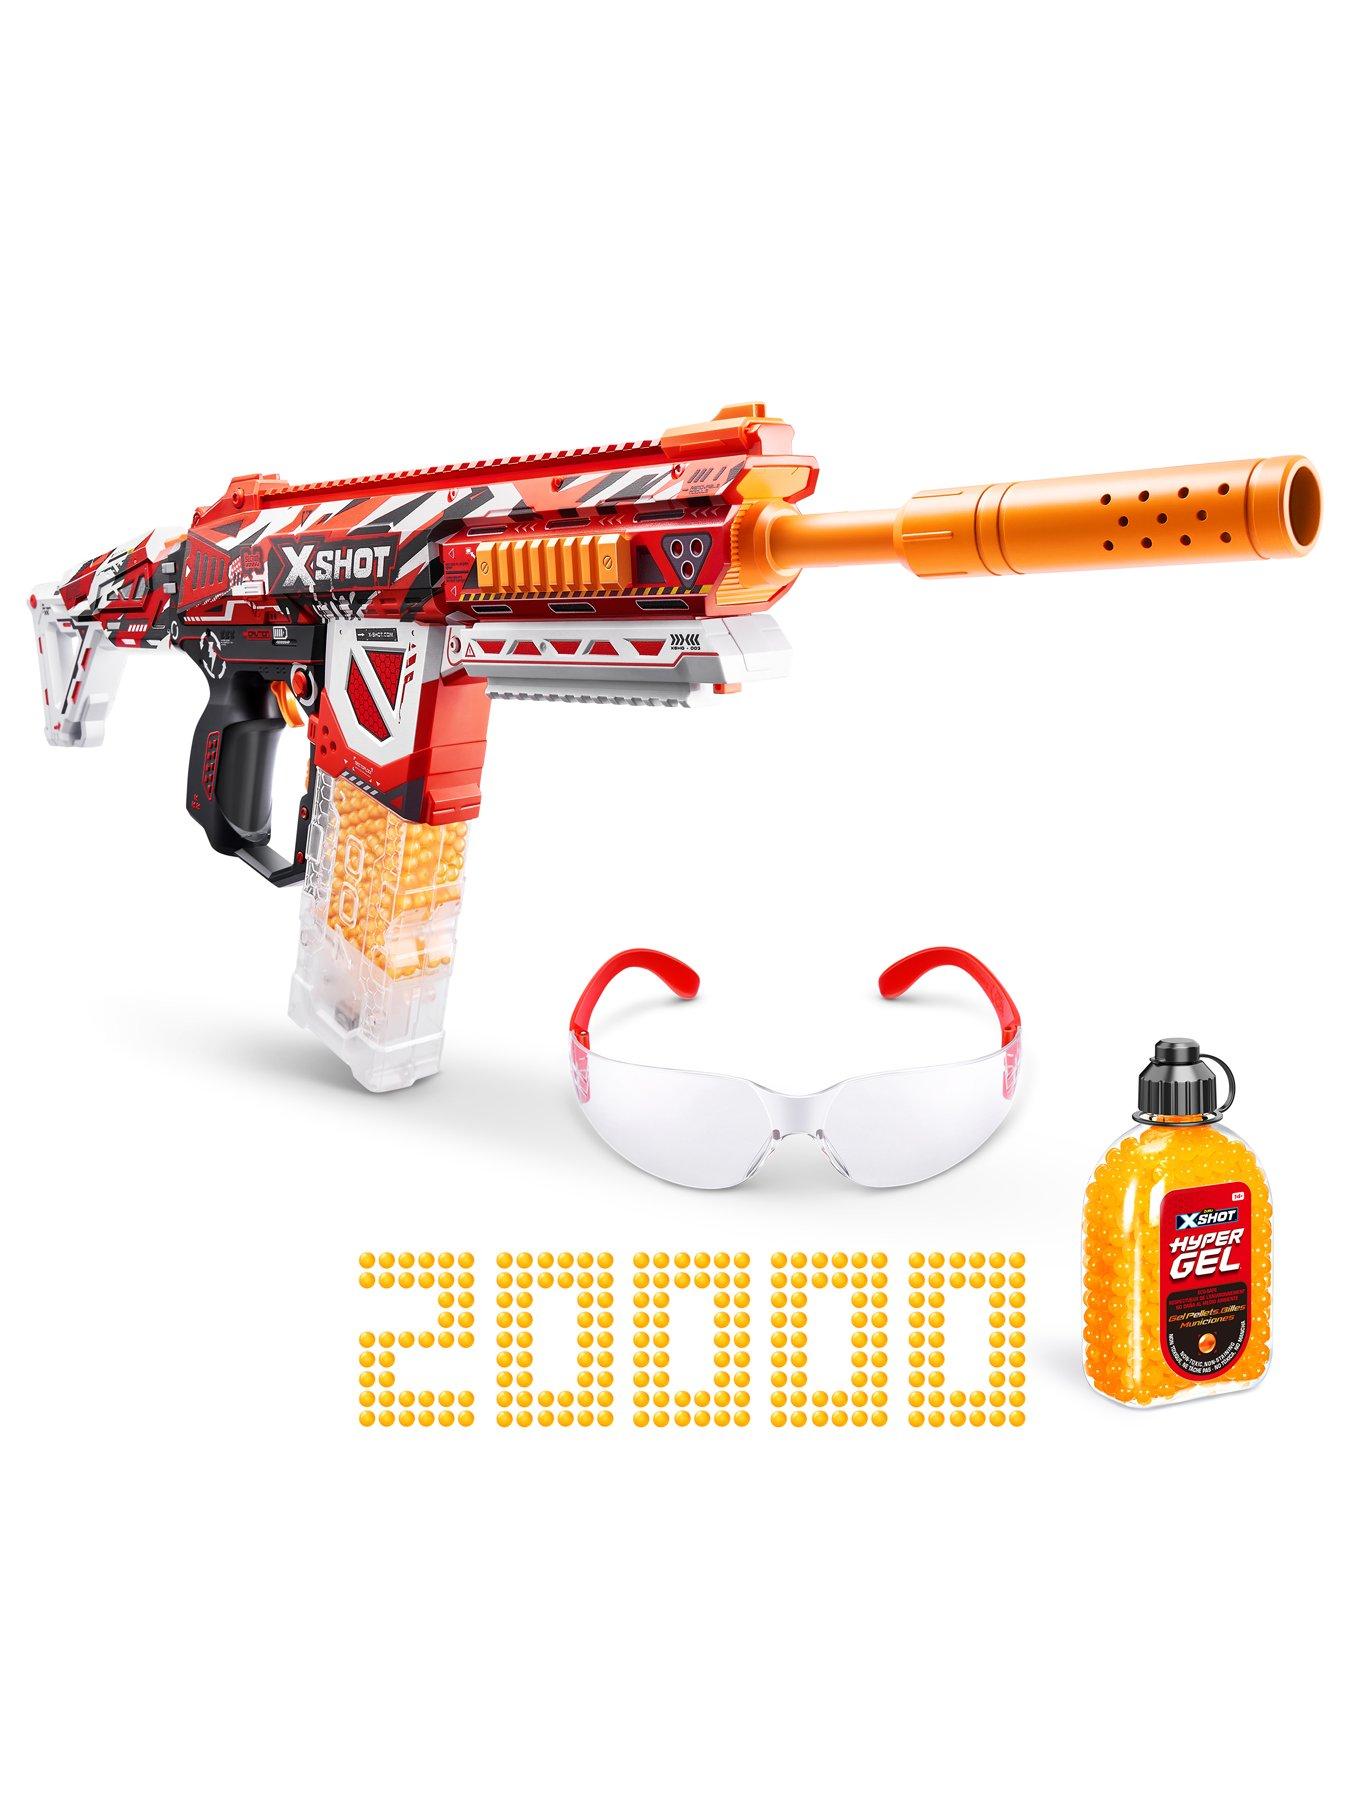 X-SHOT Hyper Gel HPG-700 Blaster (20,000 Hyper Gel Pellets) by ZURU